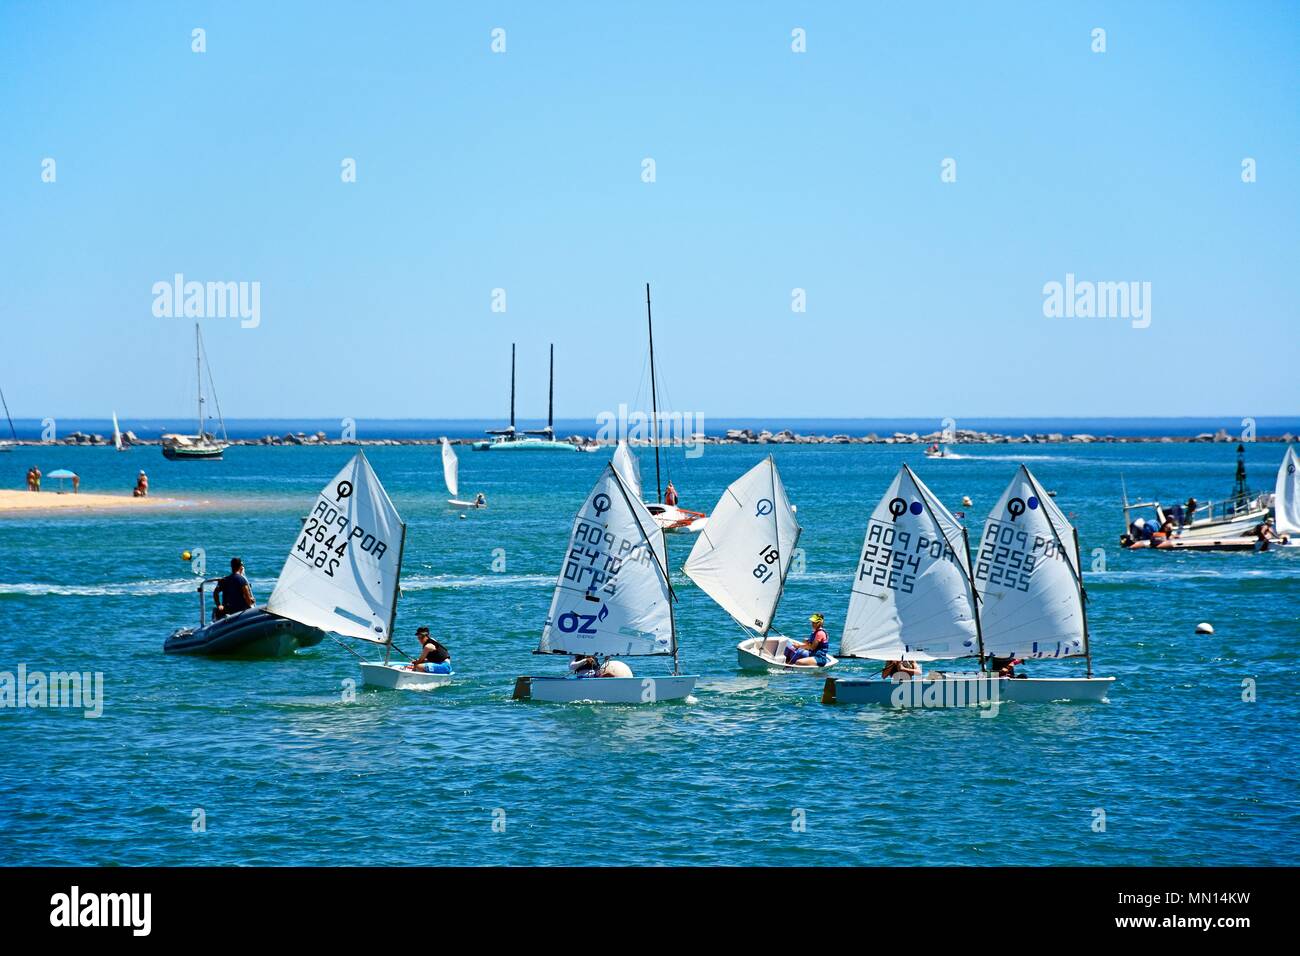 People sailing in Optimist dinghy boats on the river Arade, Ferragudo, Algarve, Portugal, Europe. Stock Photo